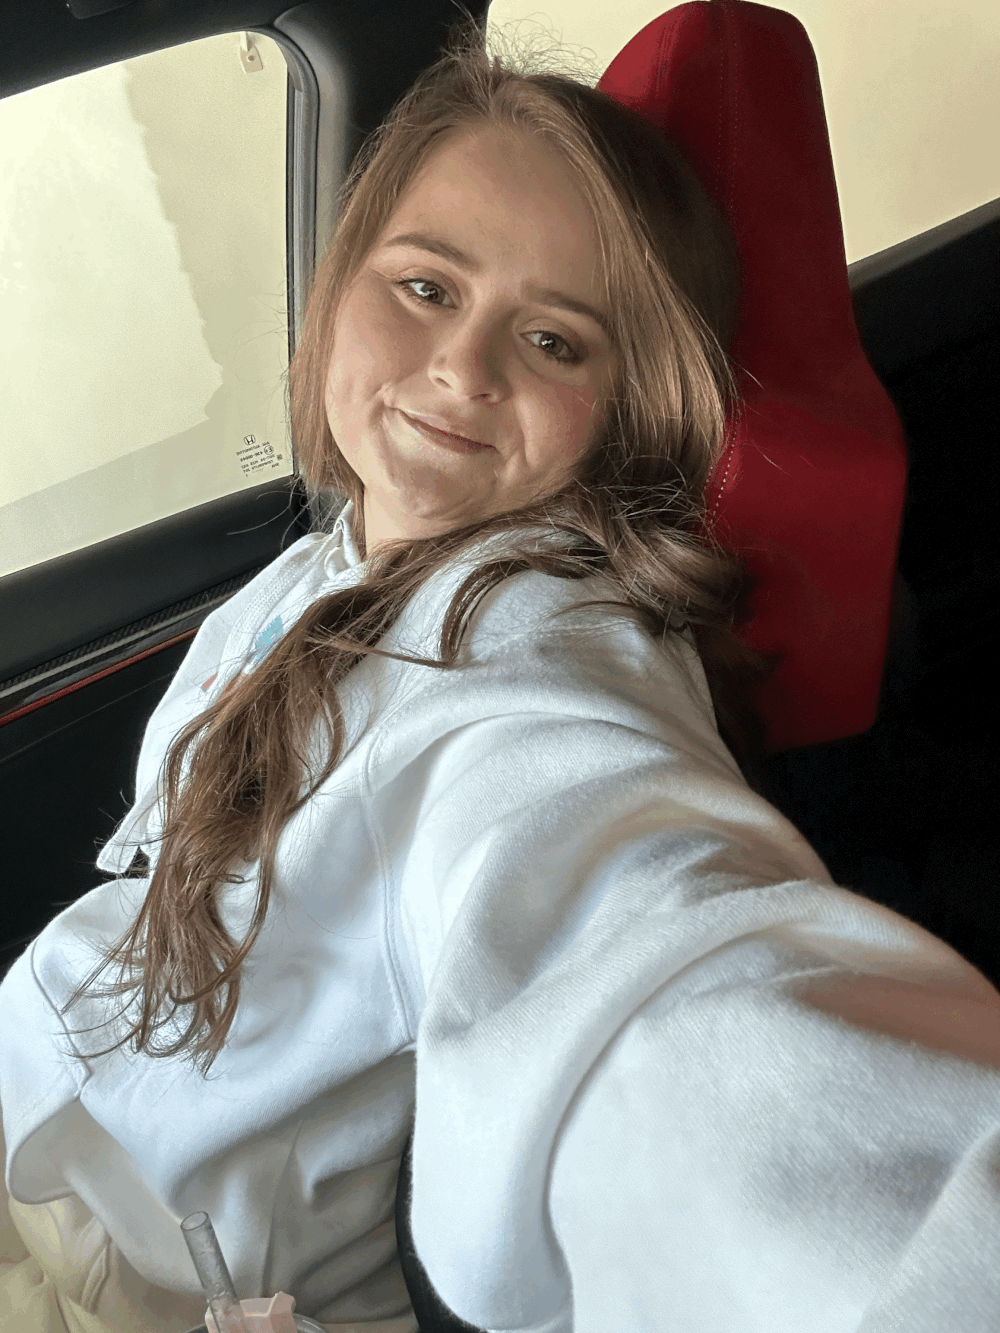 Unisex Passenger Princess Hooded Sweatshirt – HowIFheal